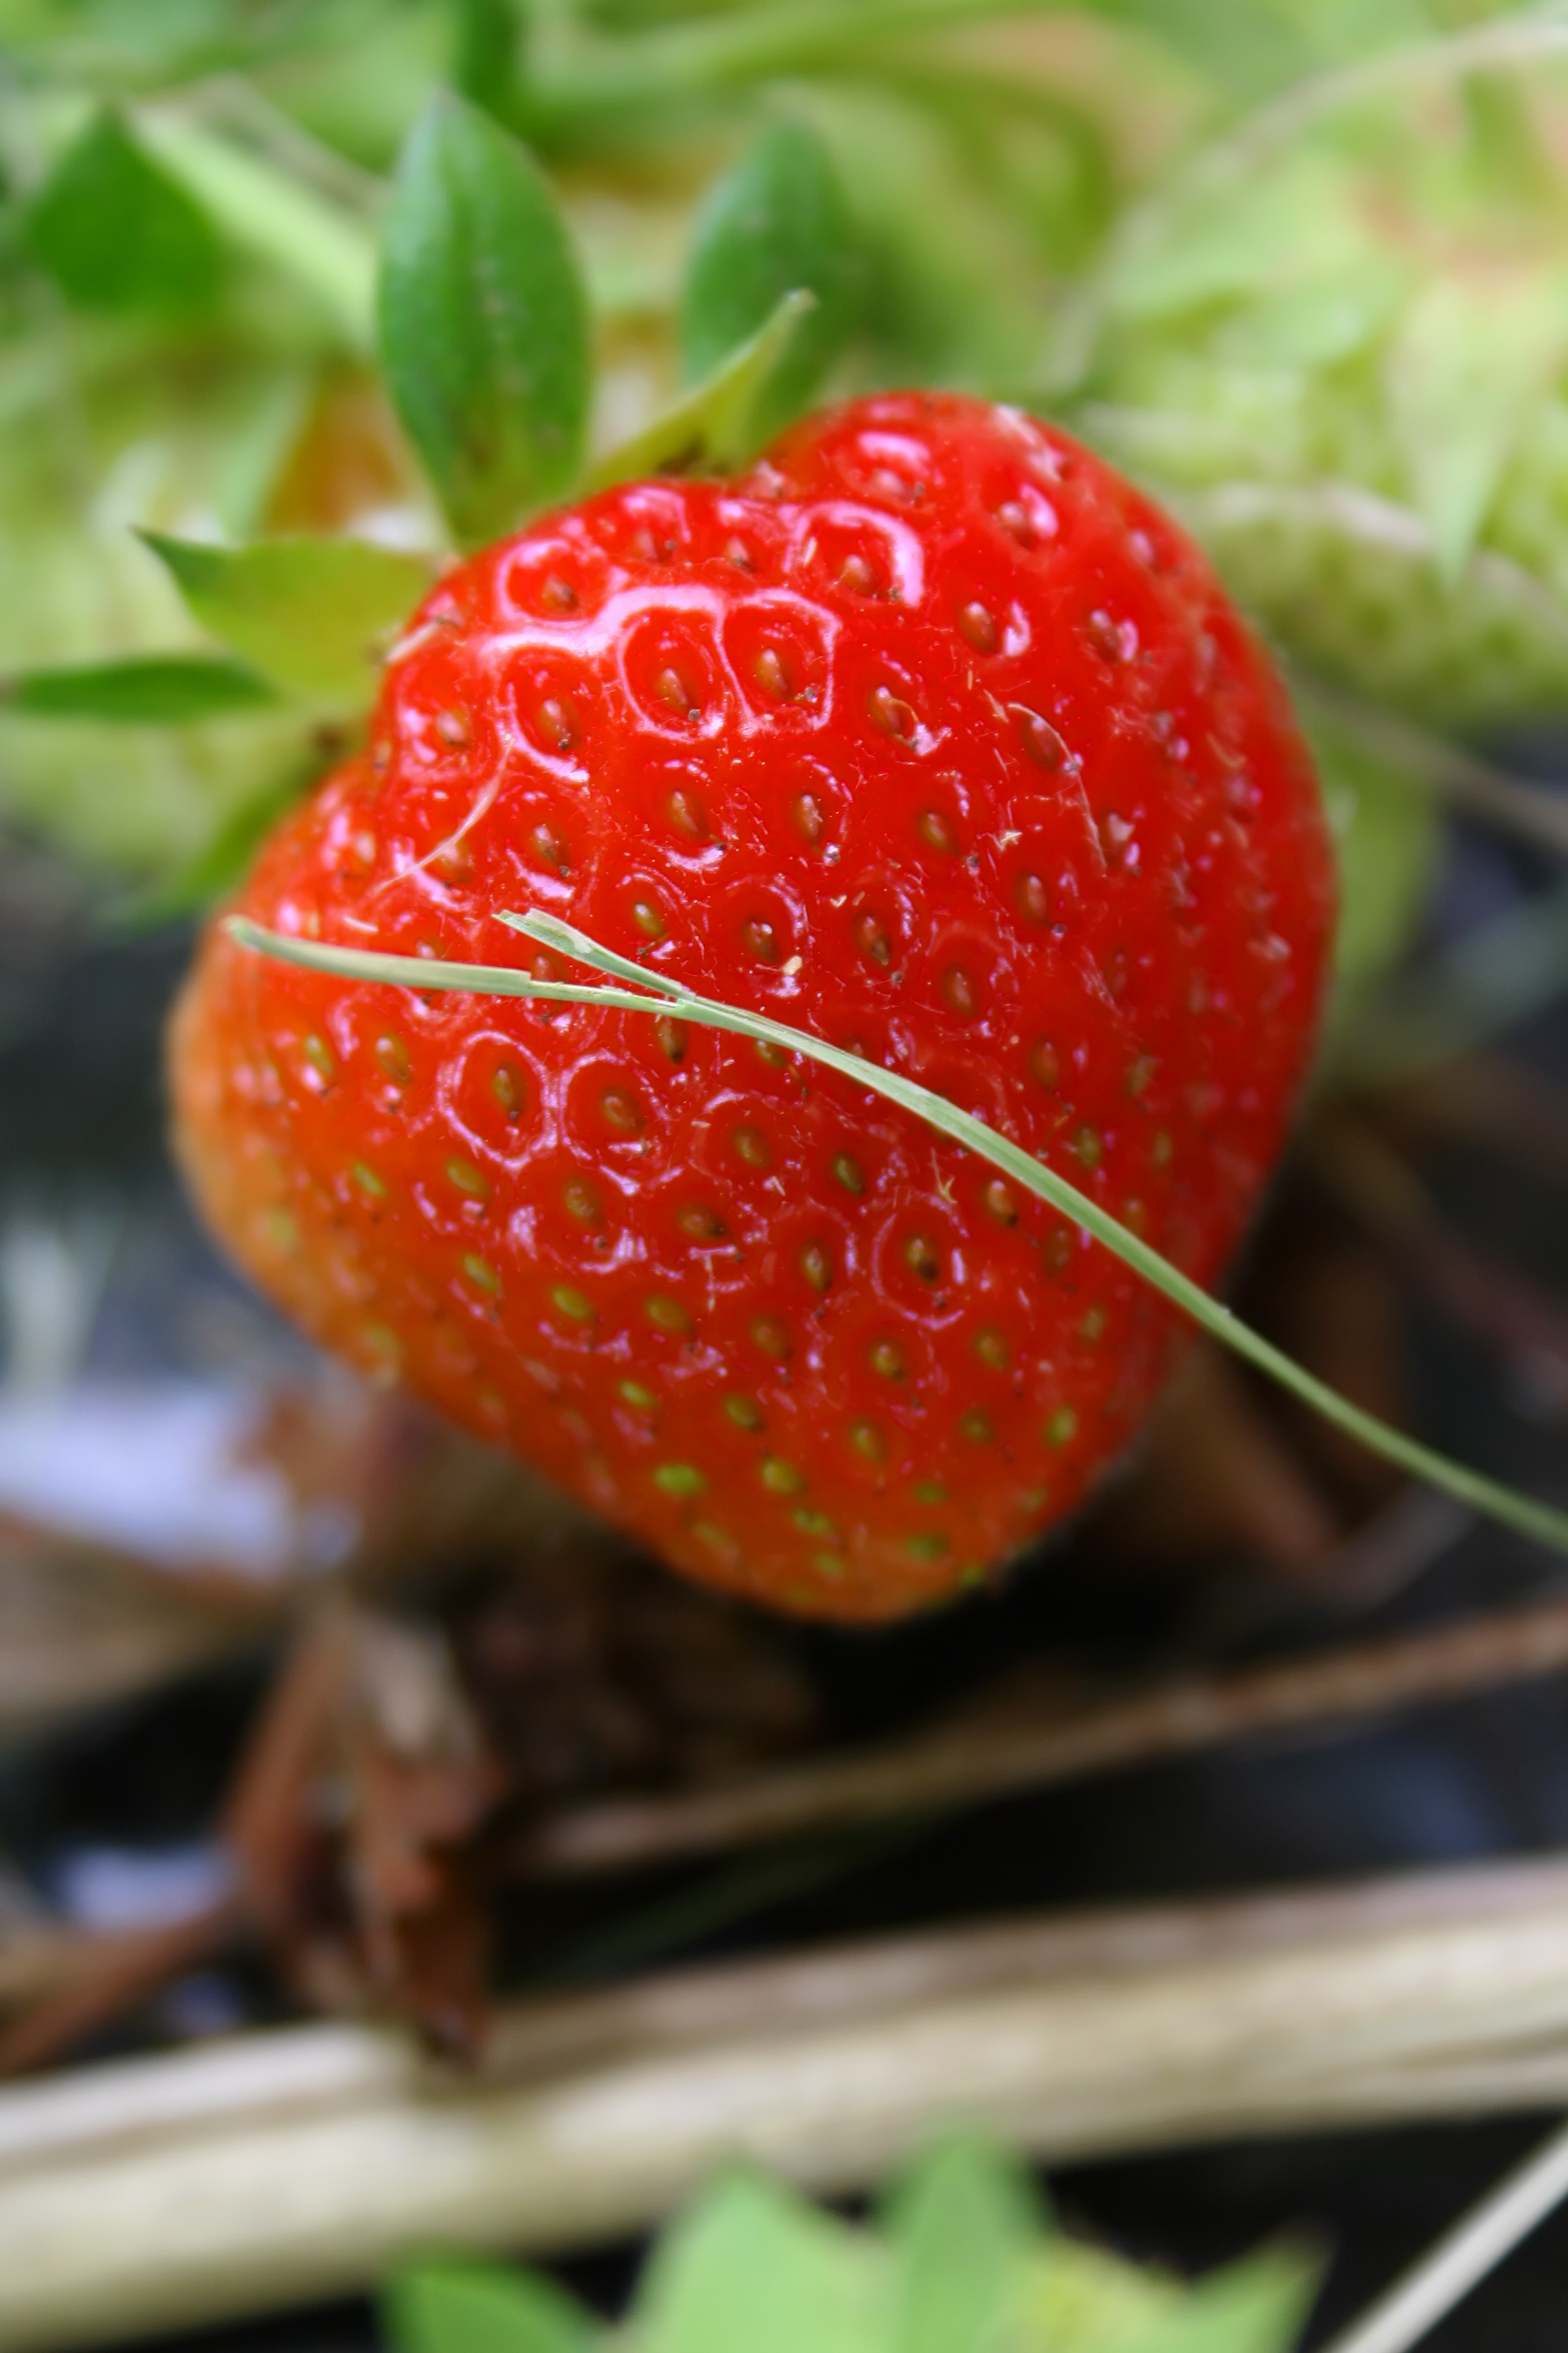 English: Strawberry